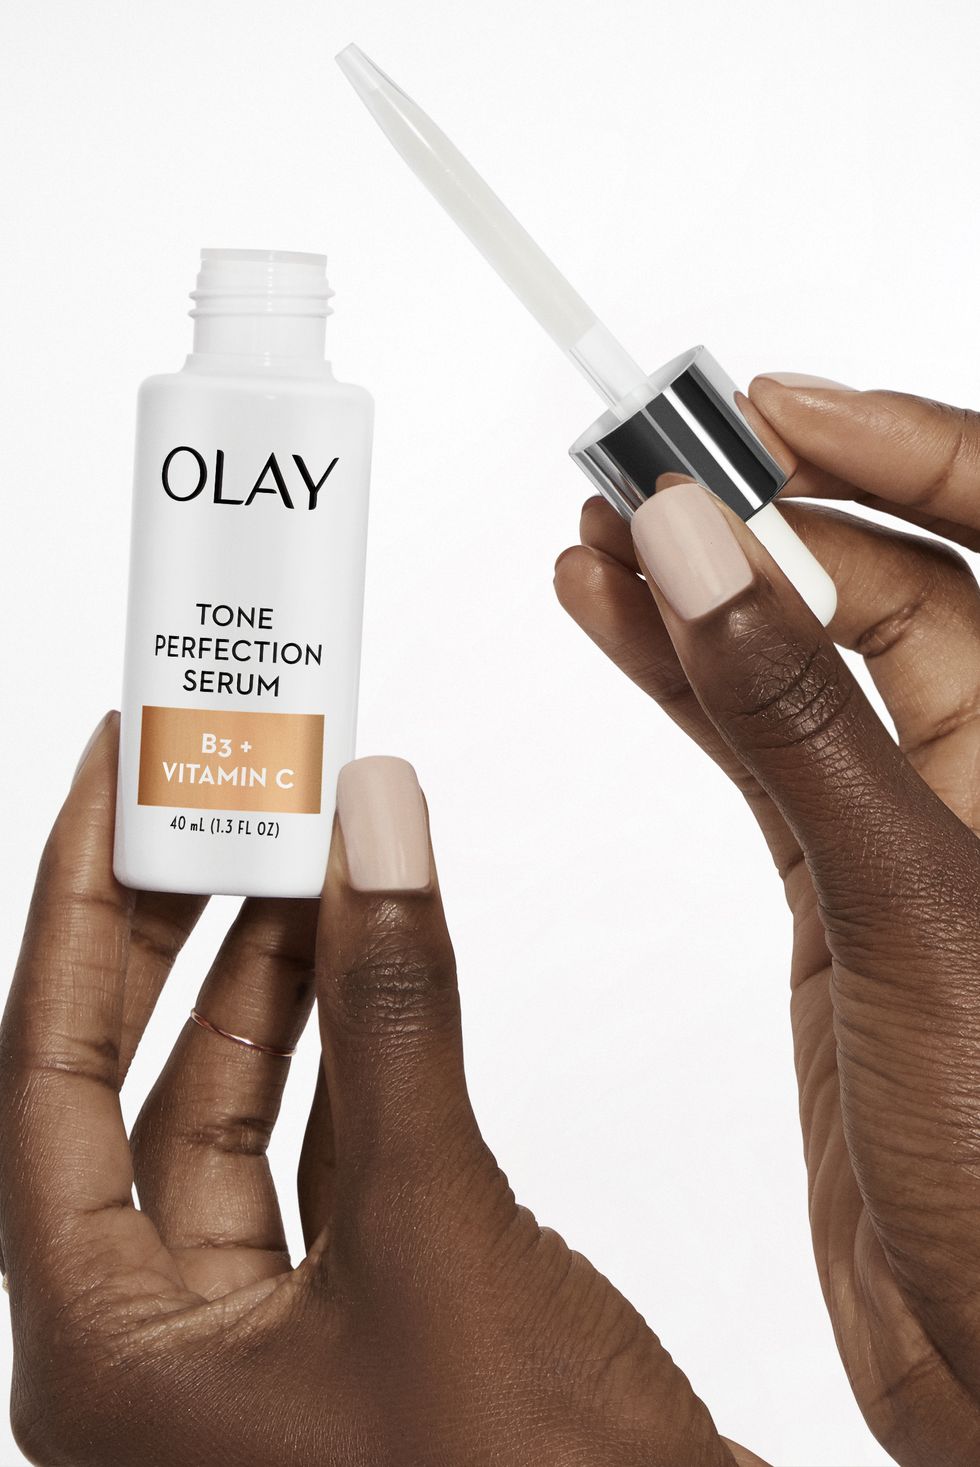 Olay Tone Perfection Serum, Vitamin B3 and Vitamin C